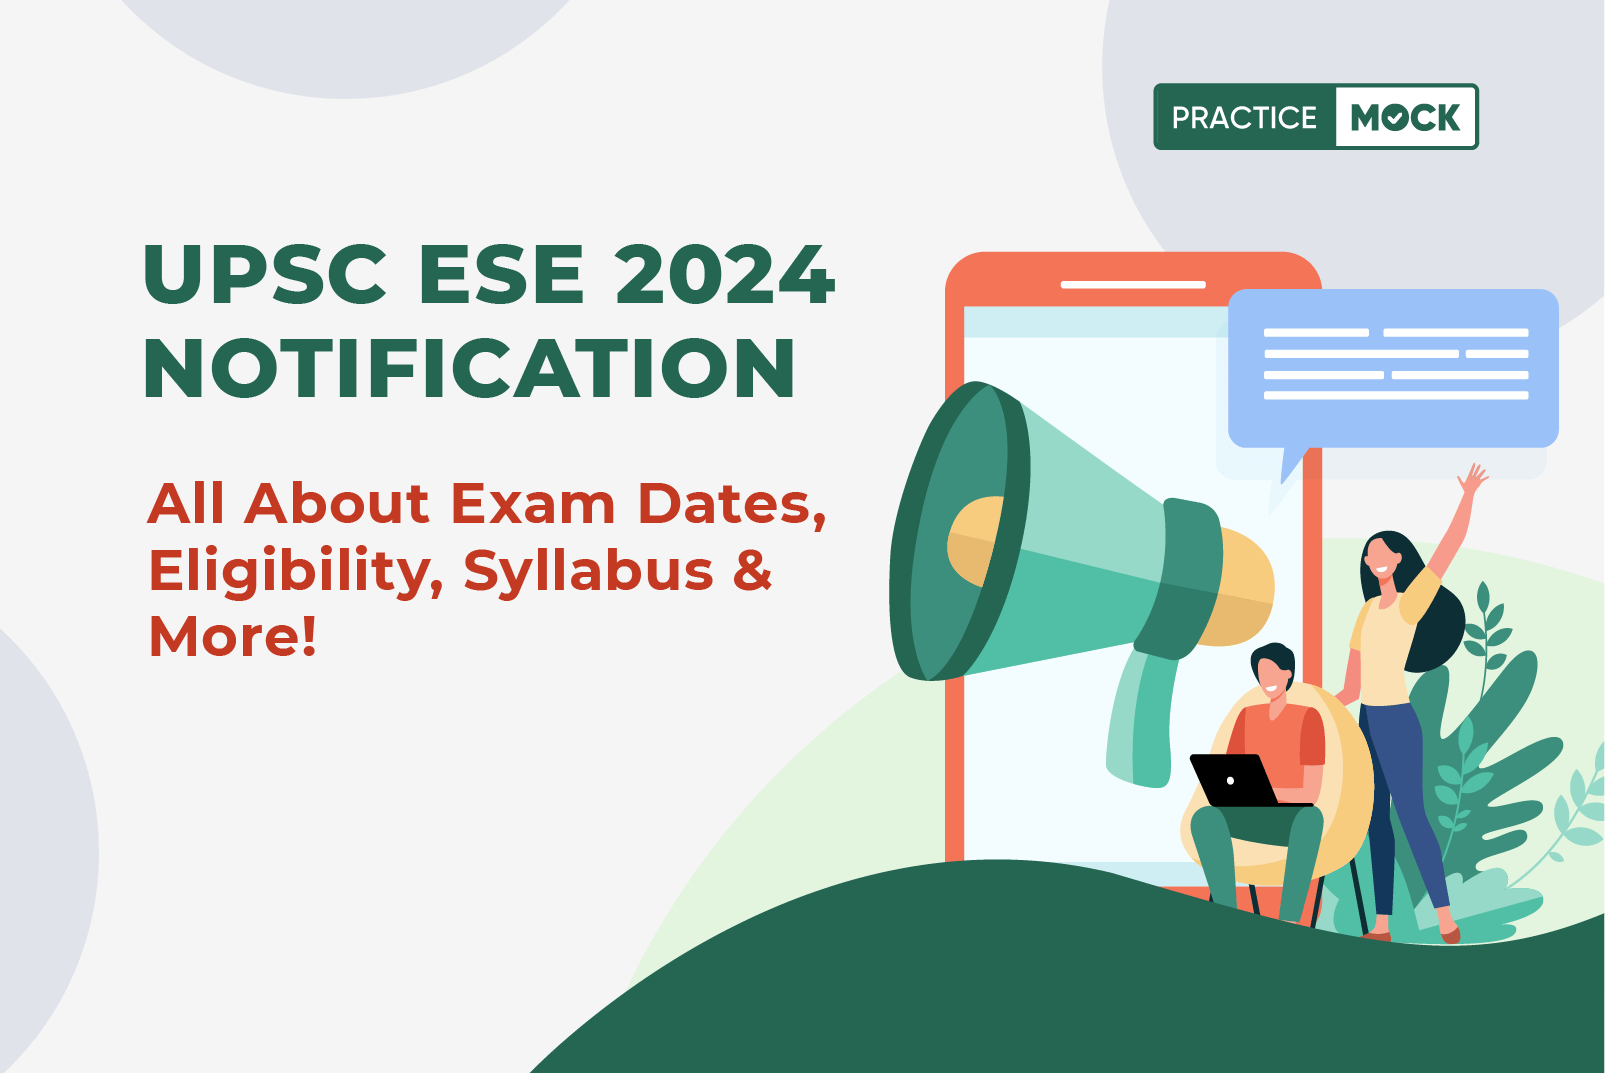 UPSC ESE 2024 Notification OutKnow the Exam Dates, Eligibility